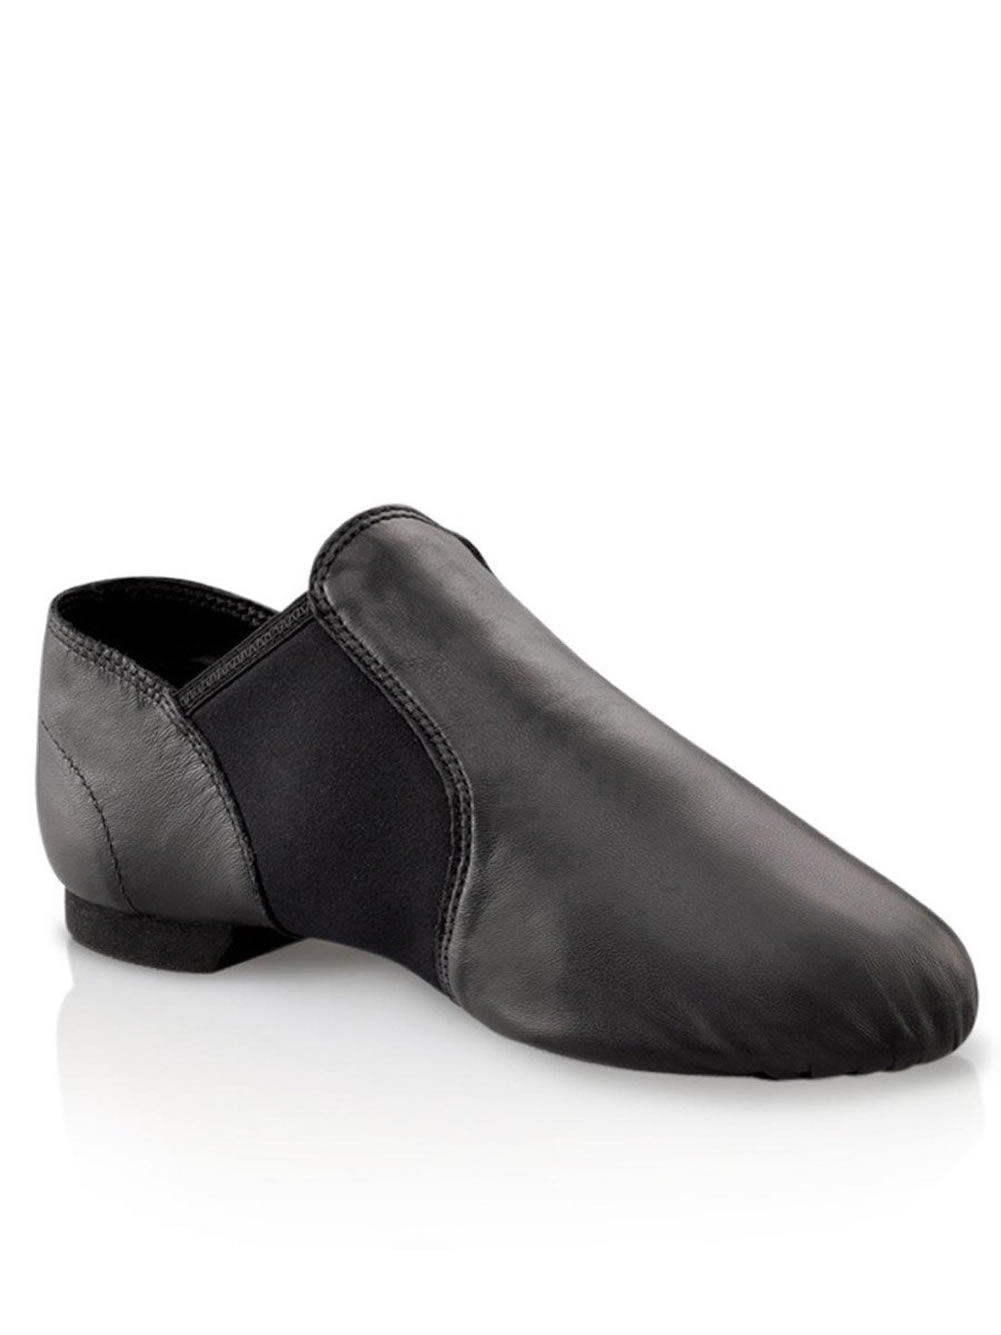 Jazz Shoes, Capezio, E-Series Jazz Slip On Child EJ2C, $41.00, from